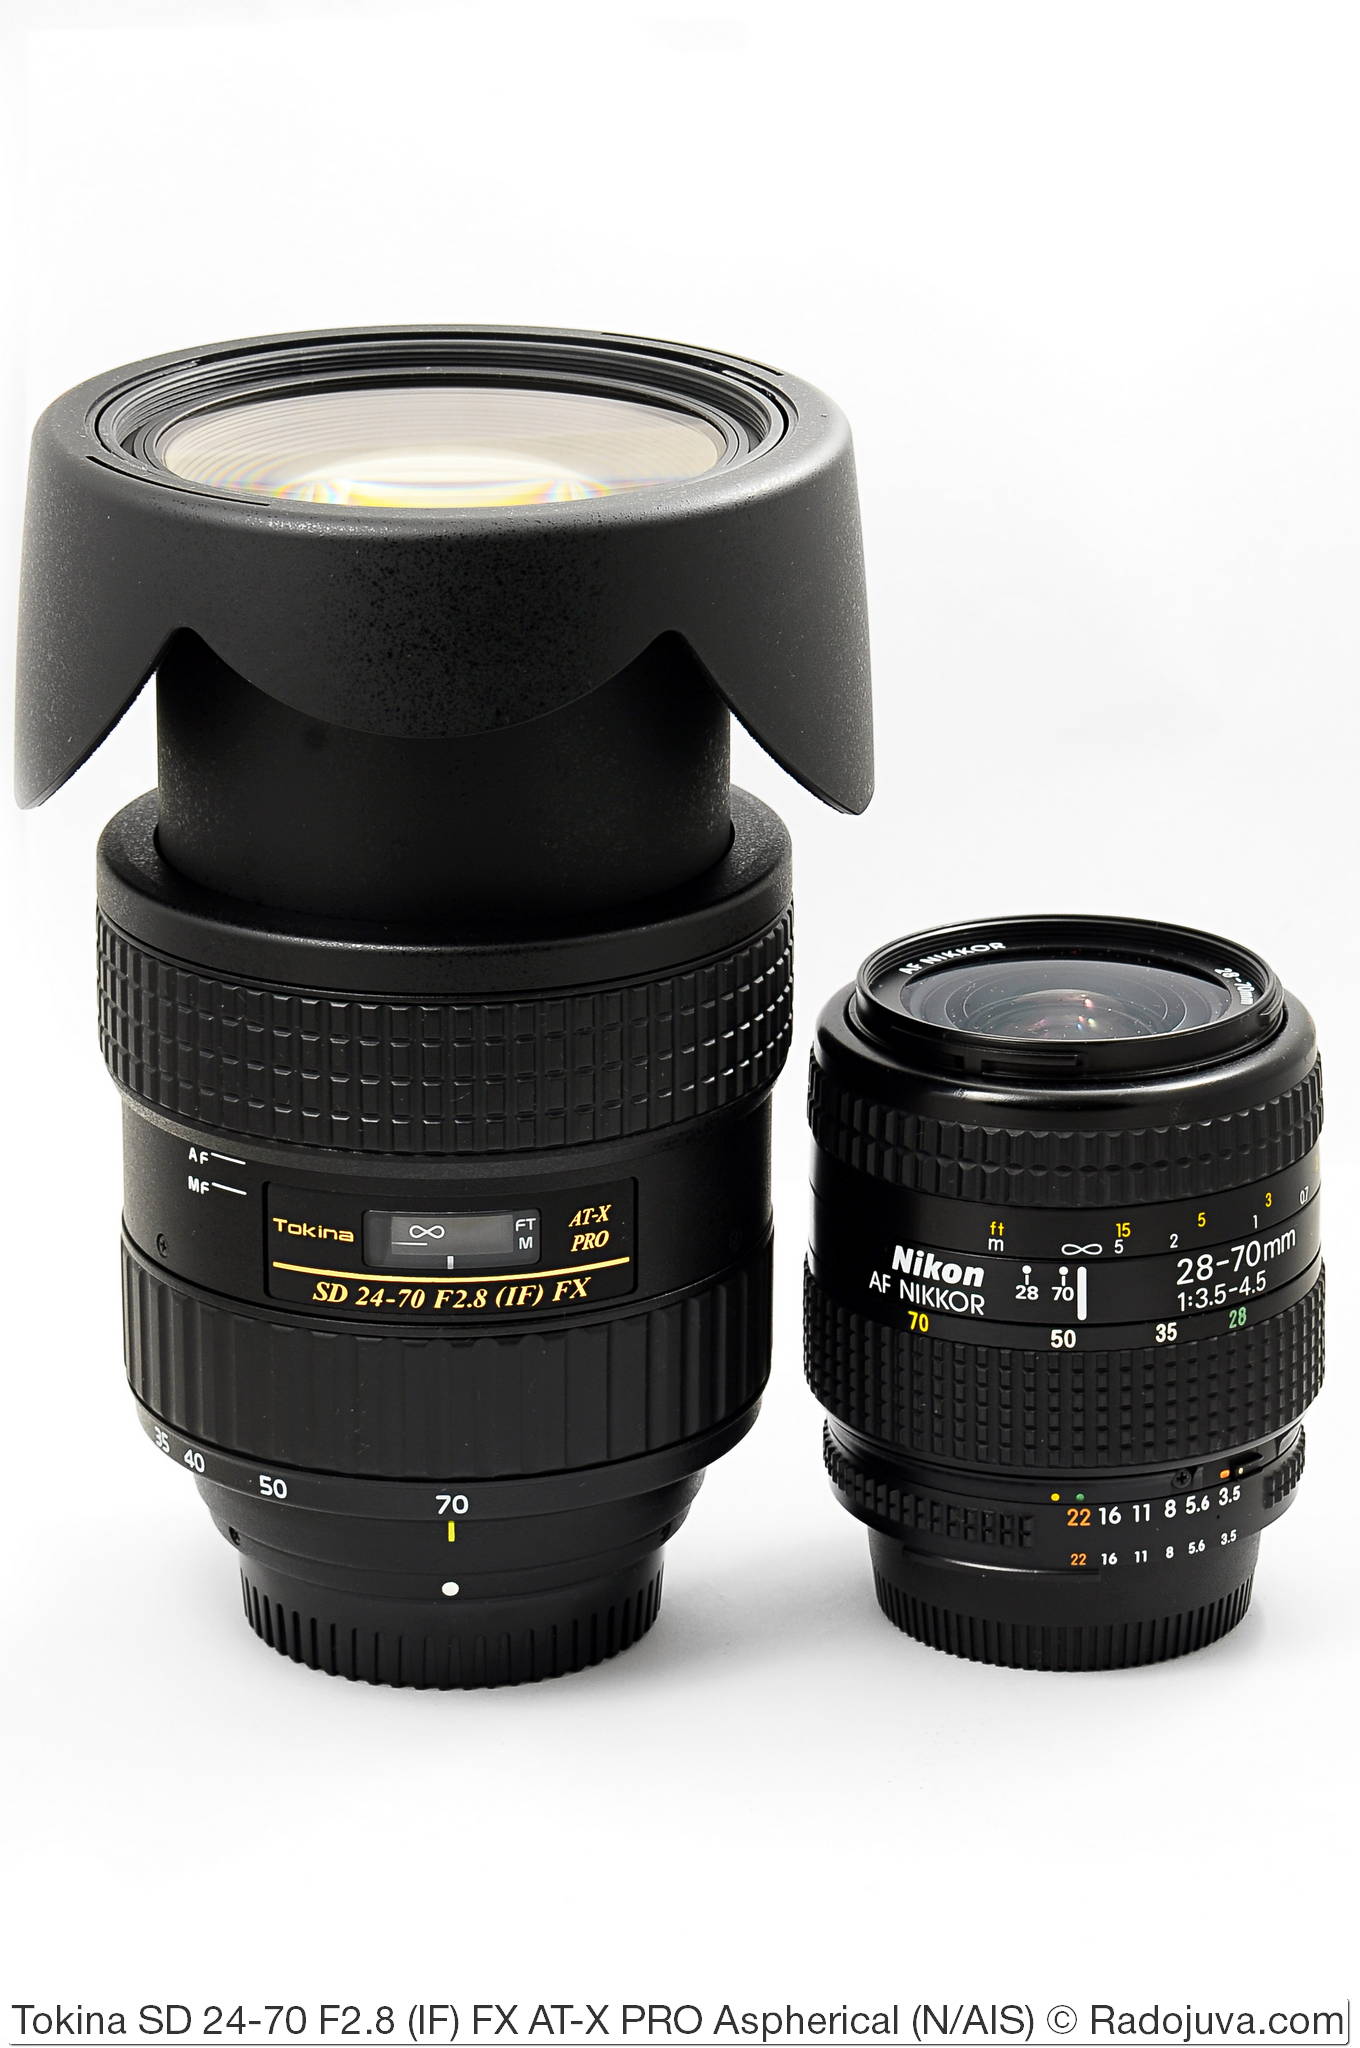 Sizes of Tokina SD 24-70 F2.8 (IF) FX AT-X PRO Aspherical and Nikon AF Nikkor 28-70mm 1: 3.5-4.5 (MKI)